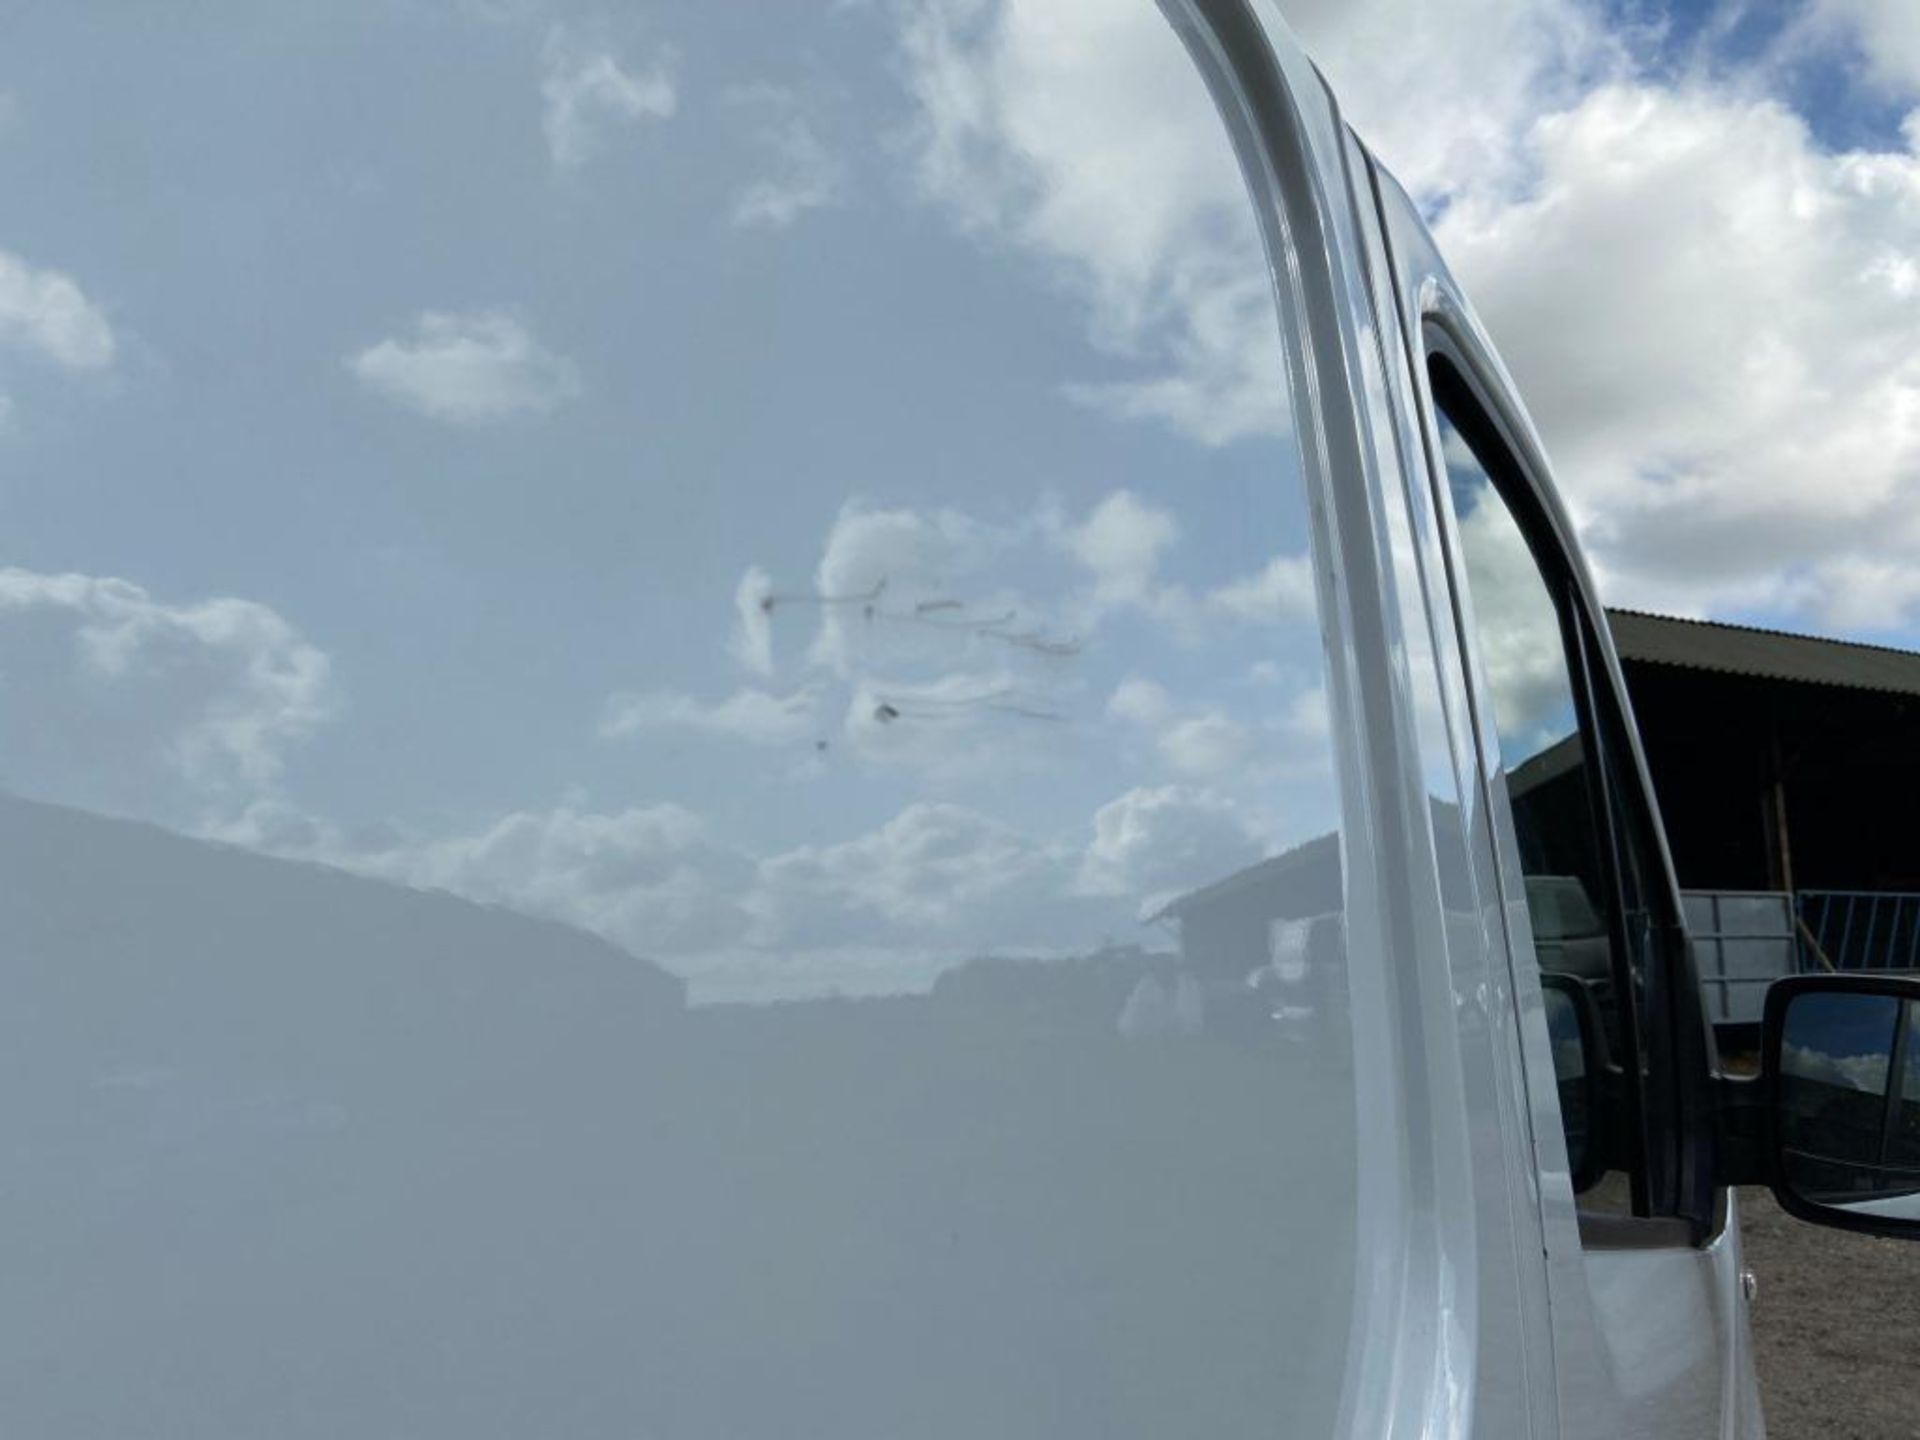 Vauxhall Vivaro 2700 CDTI panel van (2016) - Image 20 of 21